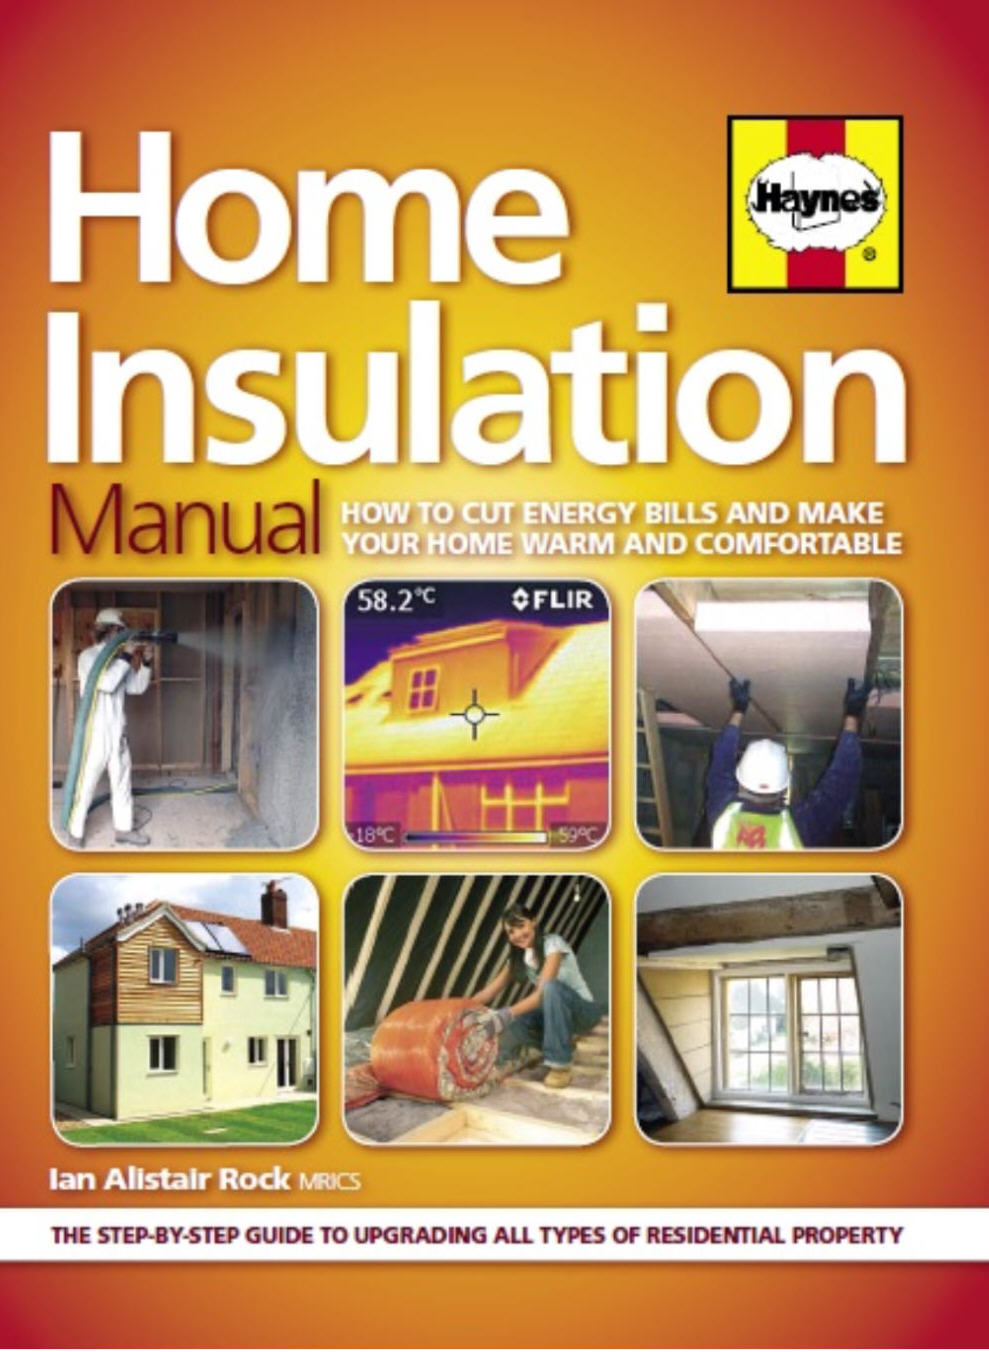 Haynes Home Insulation Manual